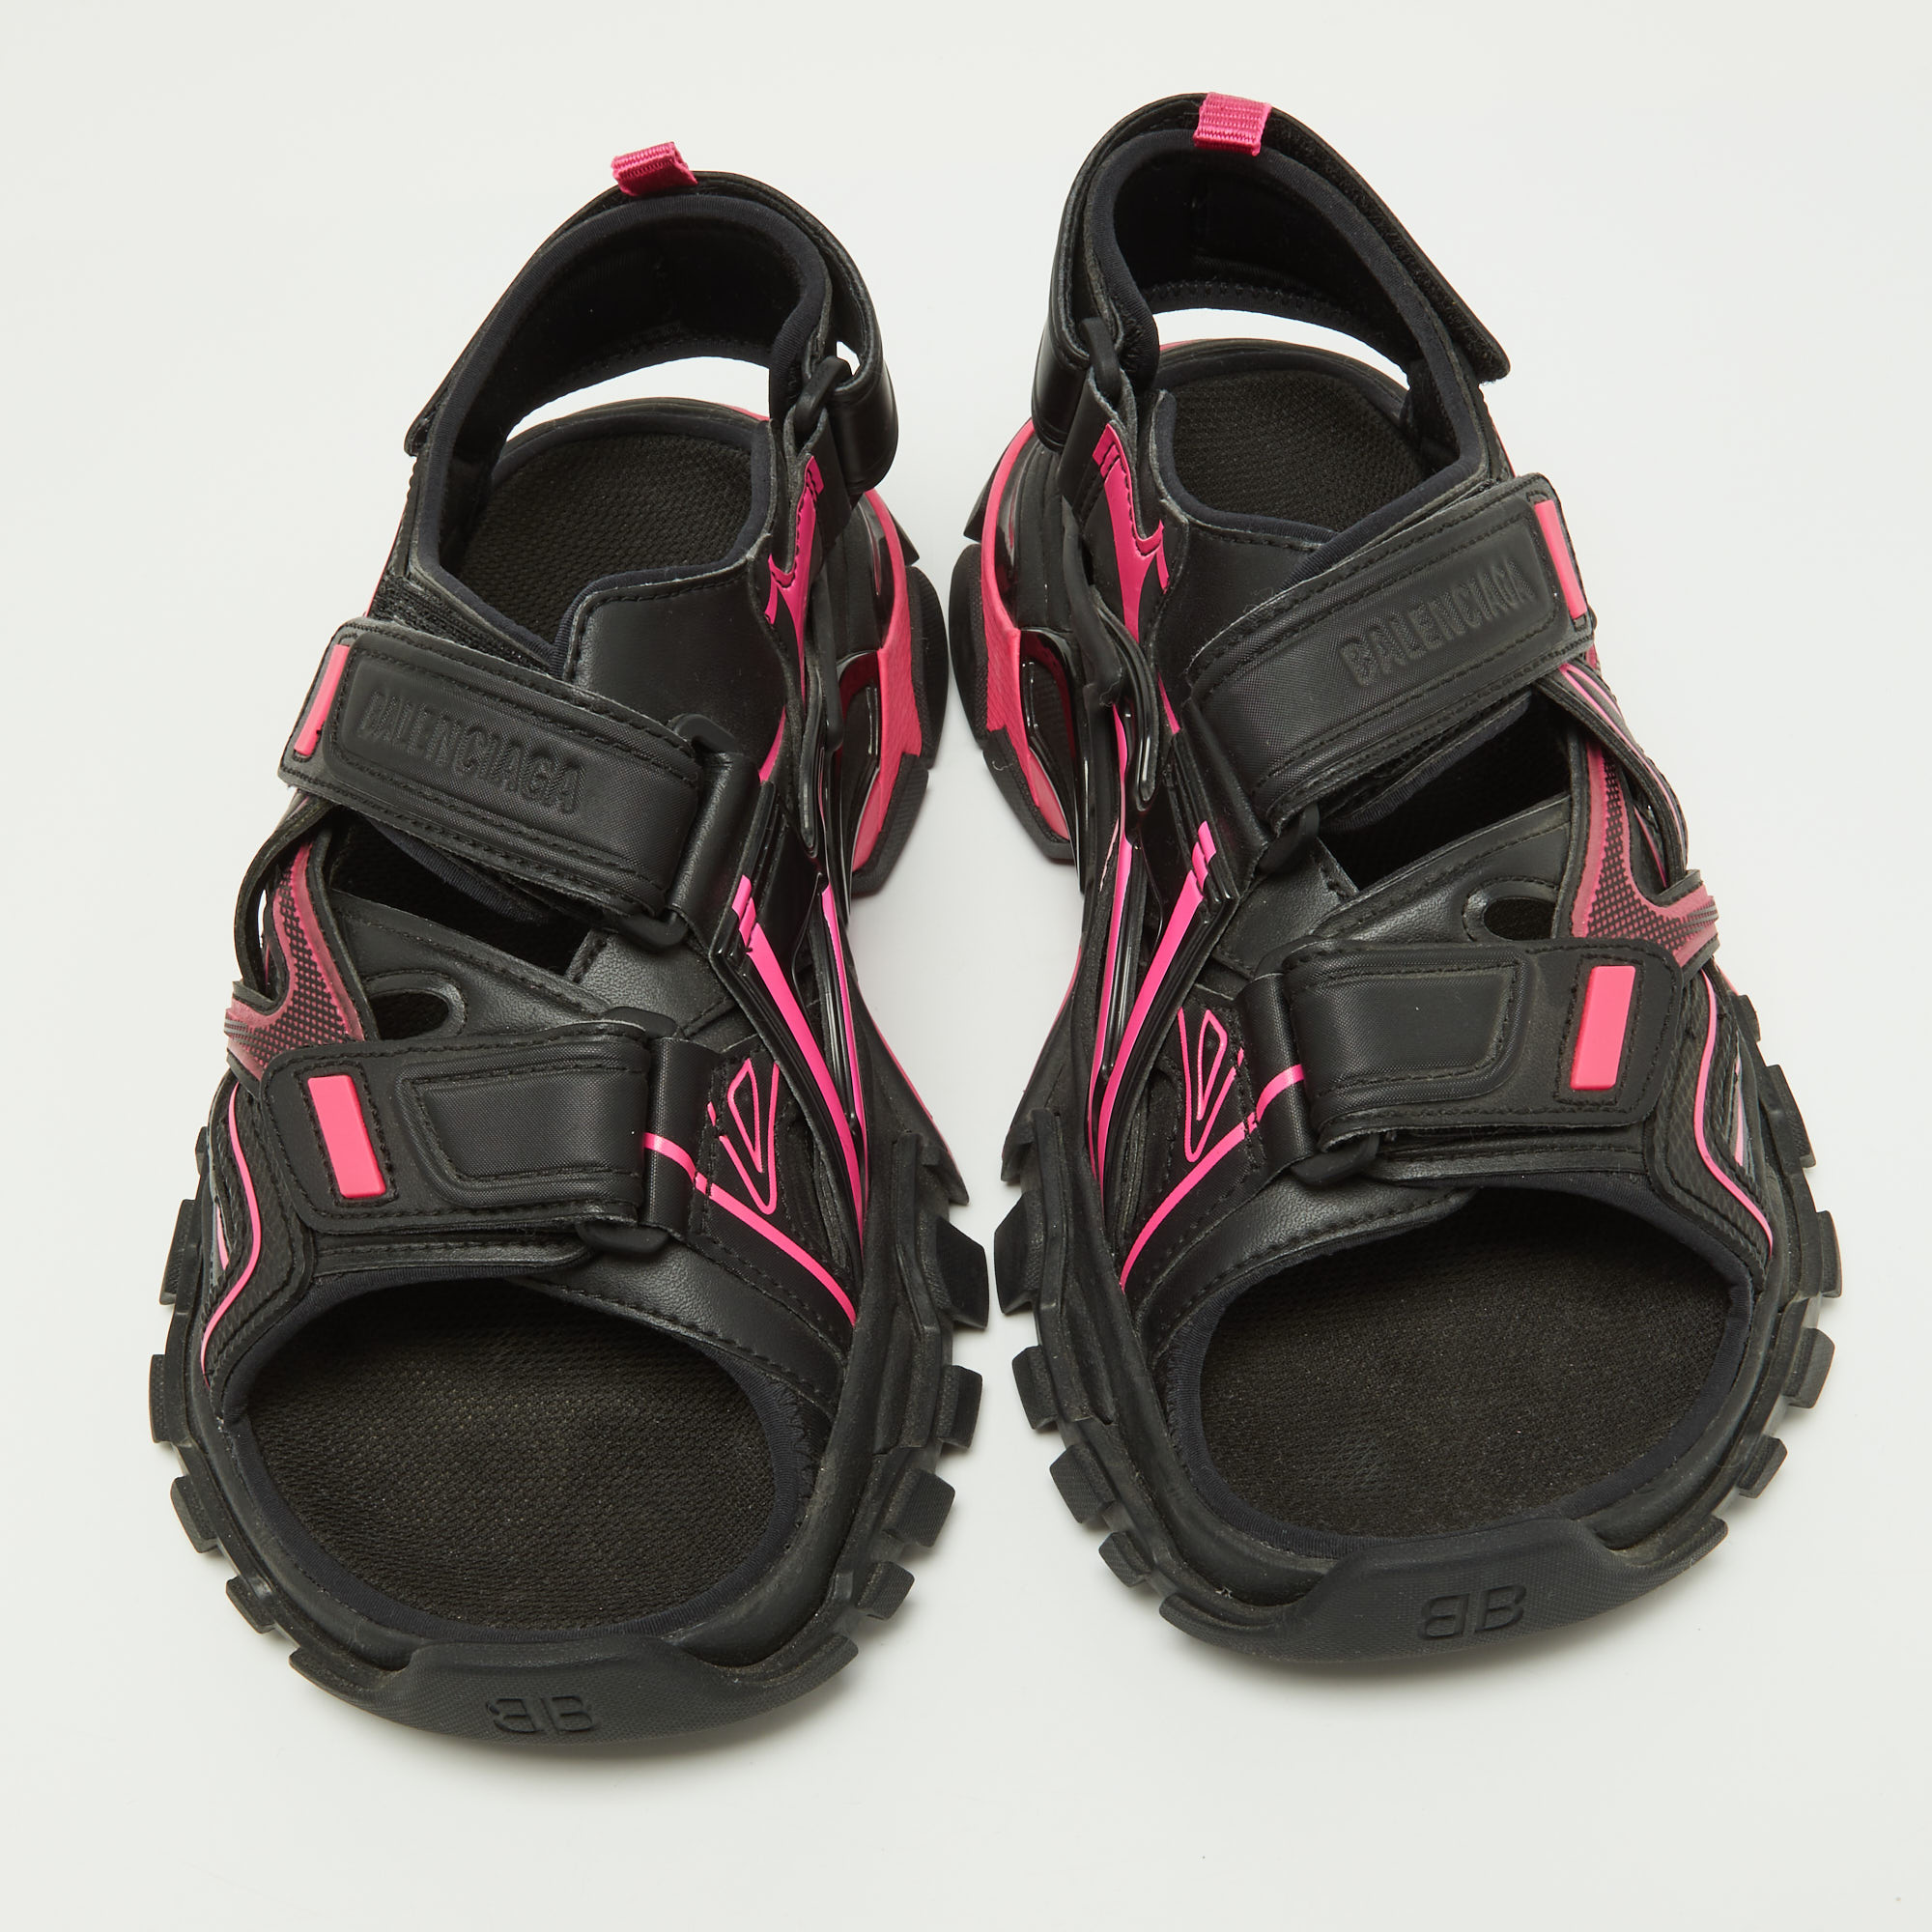 Balenciaga Black/Pink Leather Track Sandals Size 37